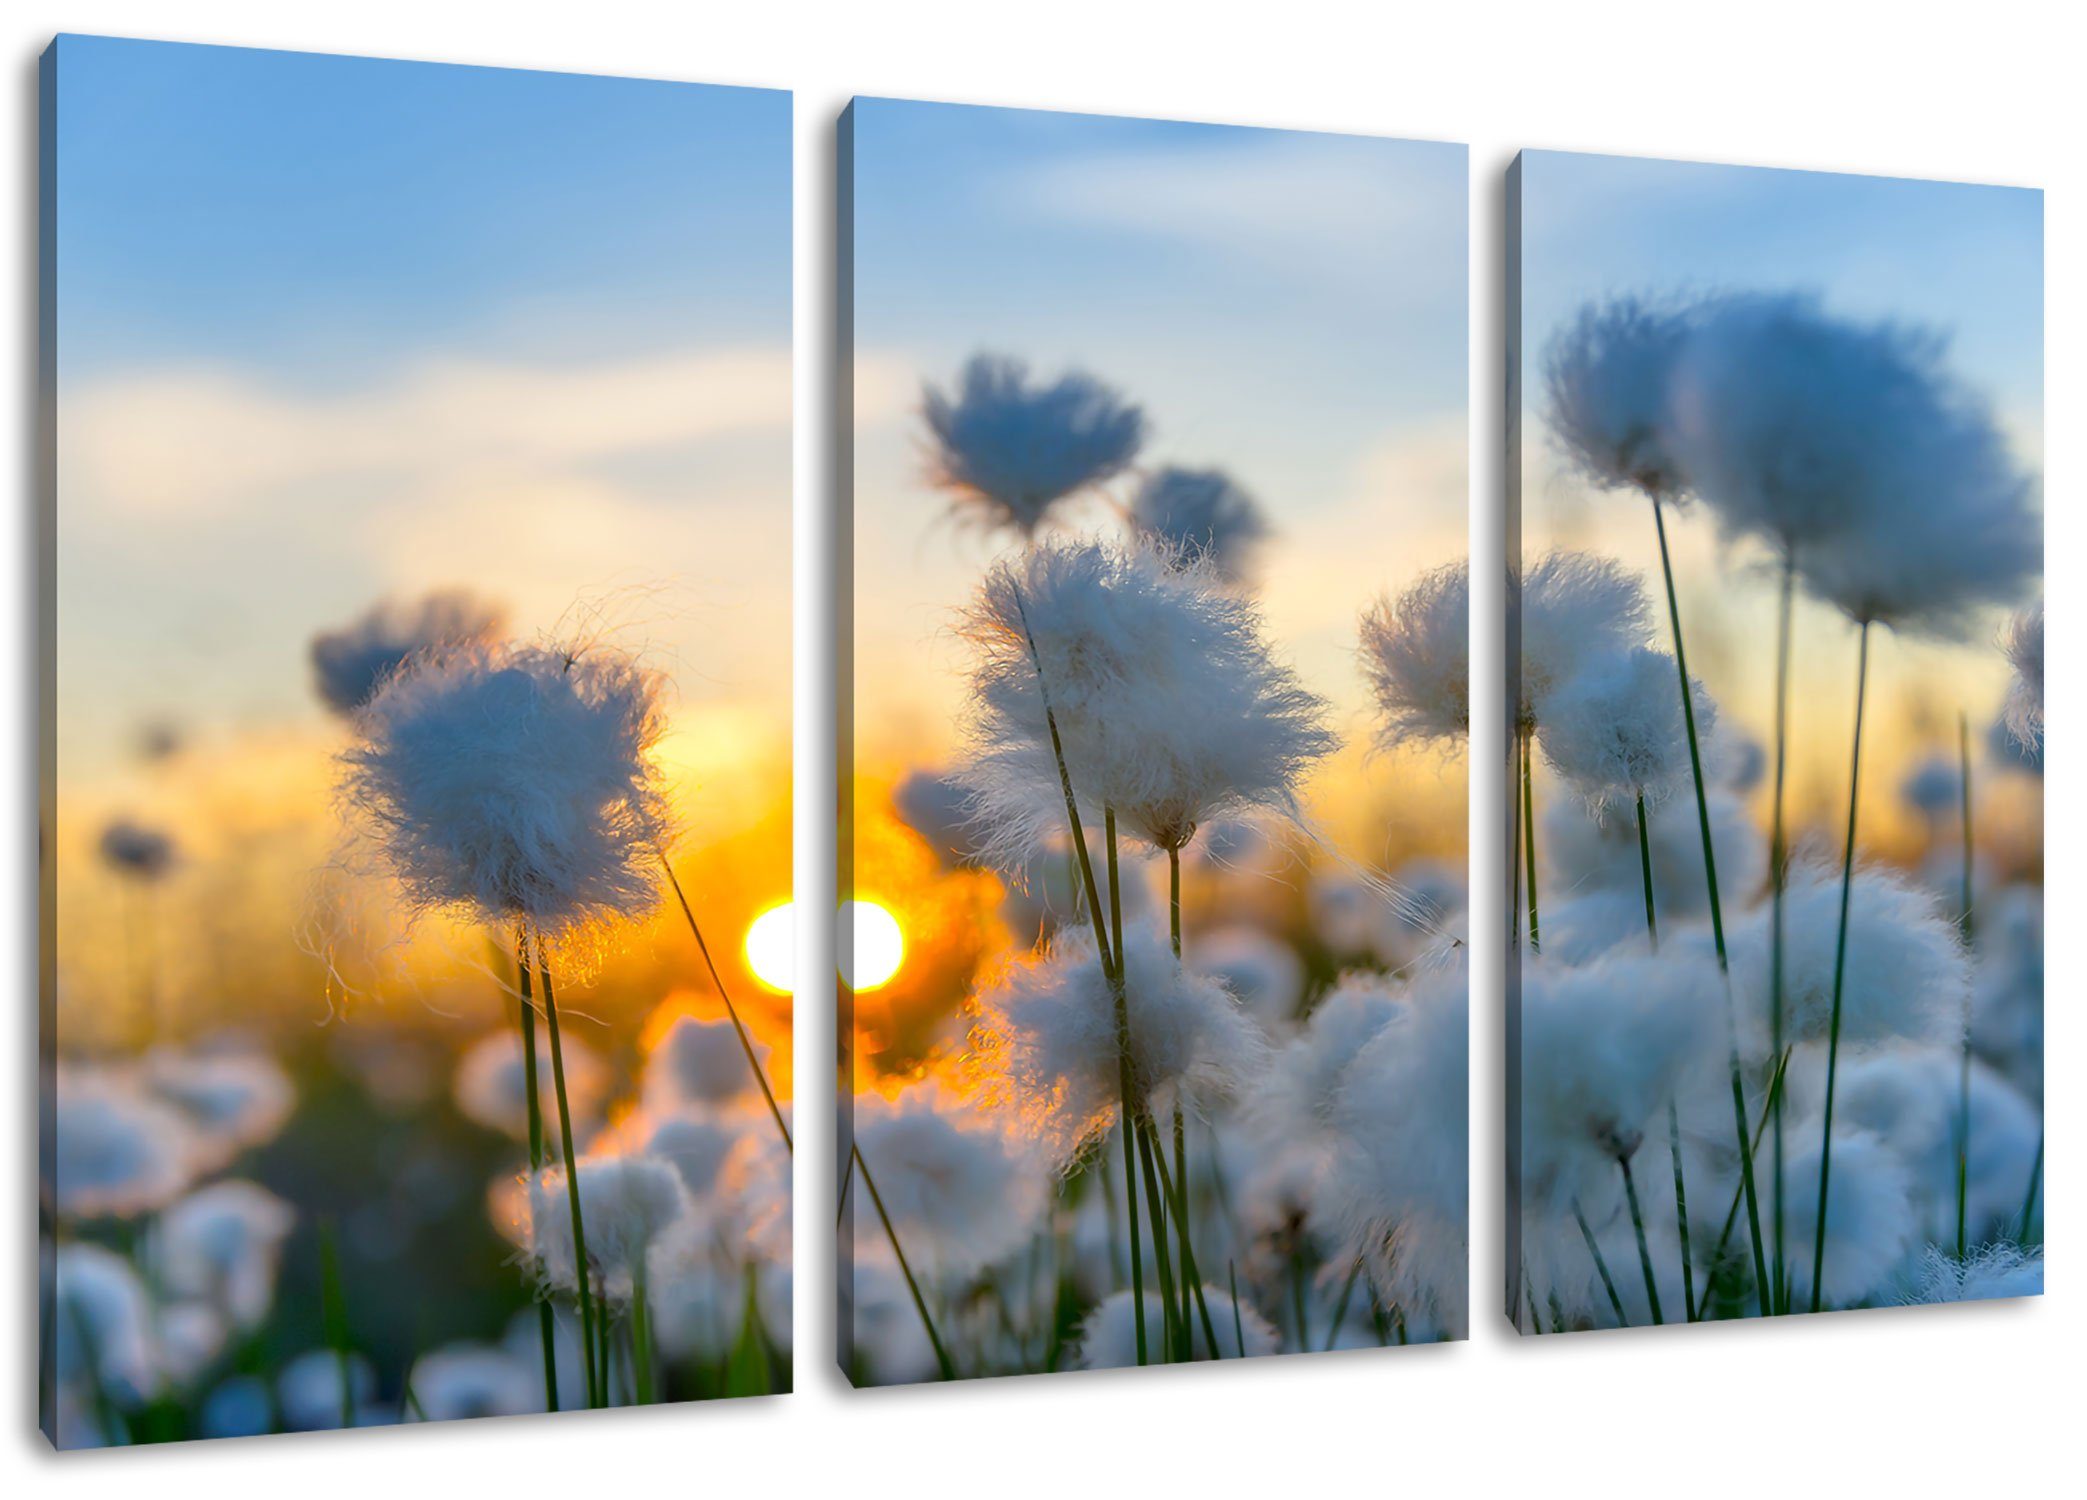 Leinwandbild 3Teiler Leinwandbild Baumwollblüten im Pixxprint (120x80cm) Sonnenuntergang St), Sonnenuntergang, bespannt, (1 inkl. Baumwollblüten Zackenaufhänger im fertig